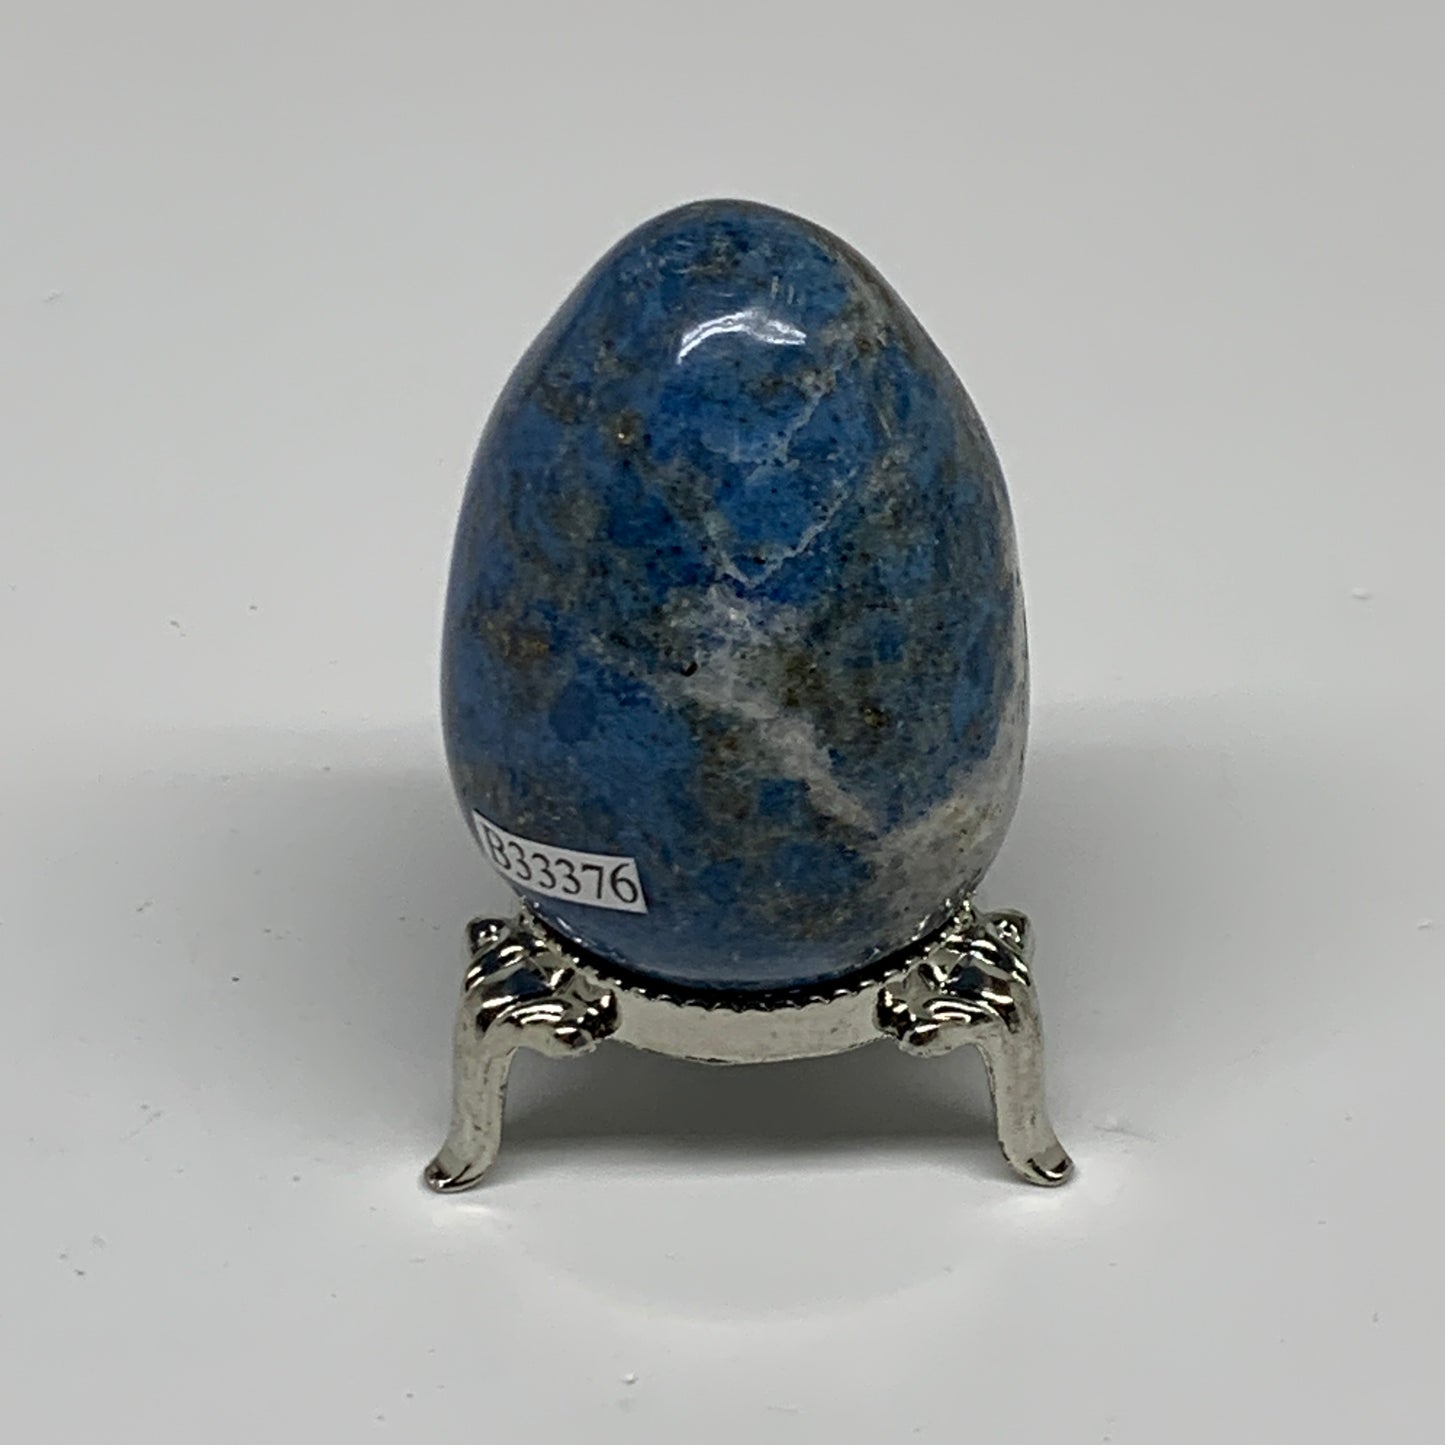 119.9g, 2.1"x1.5", Natural Lapis Lazuli Egg Polished, Clearance, B33376